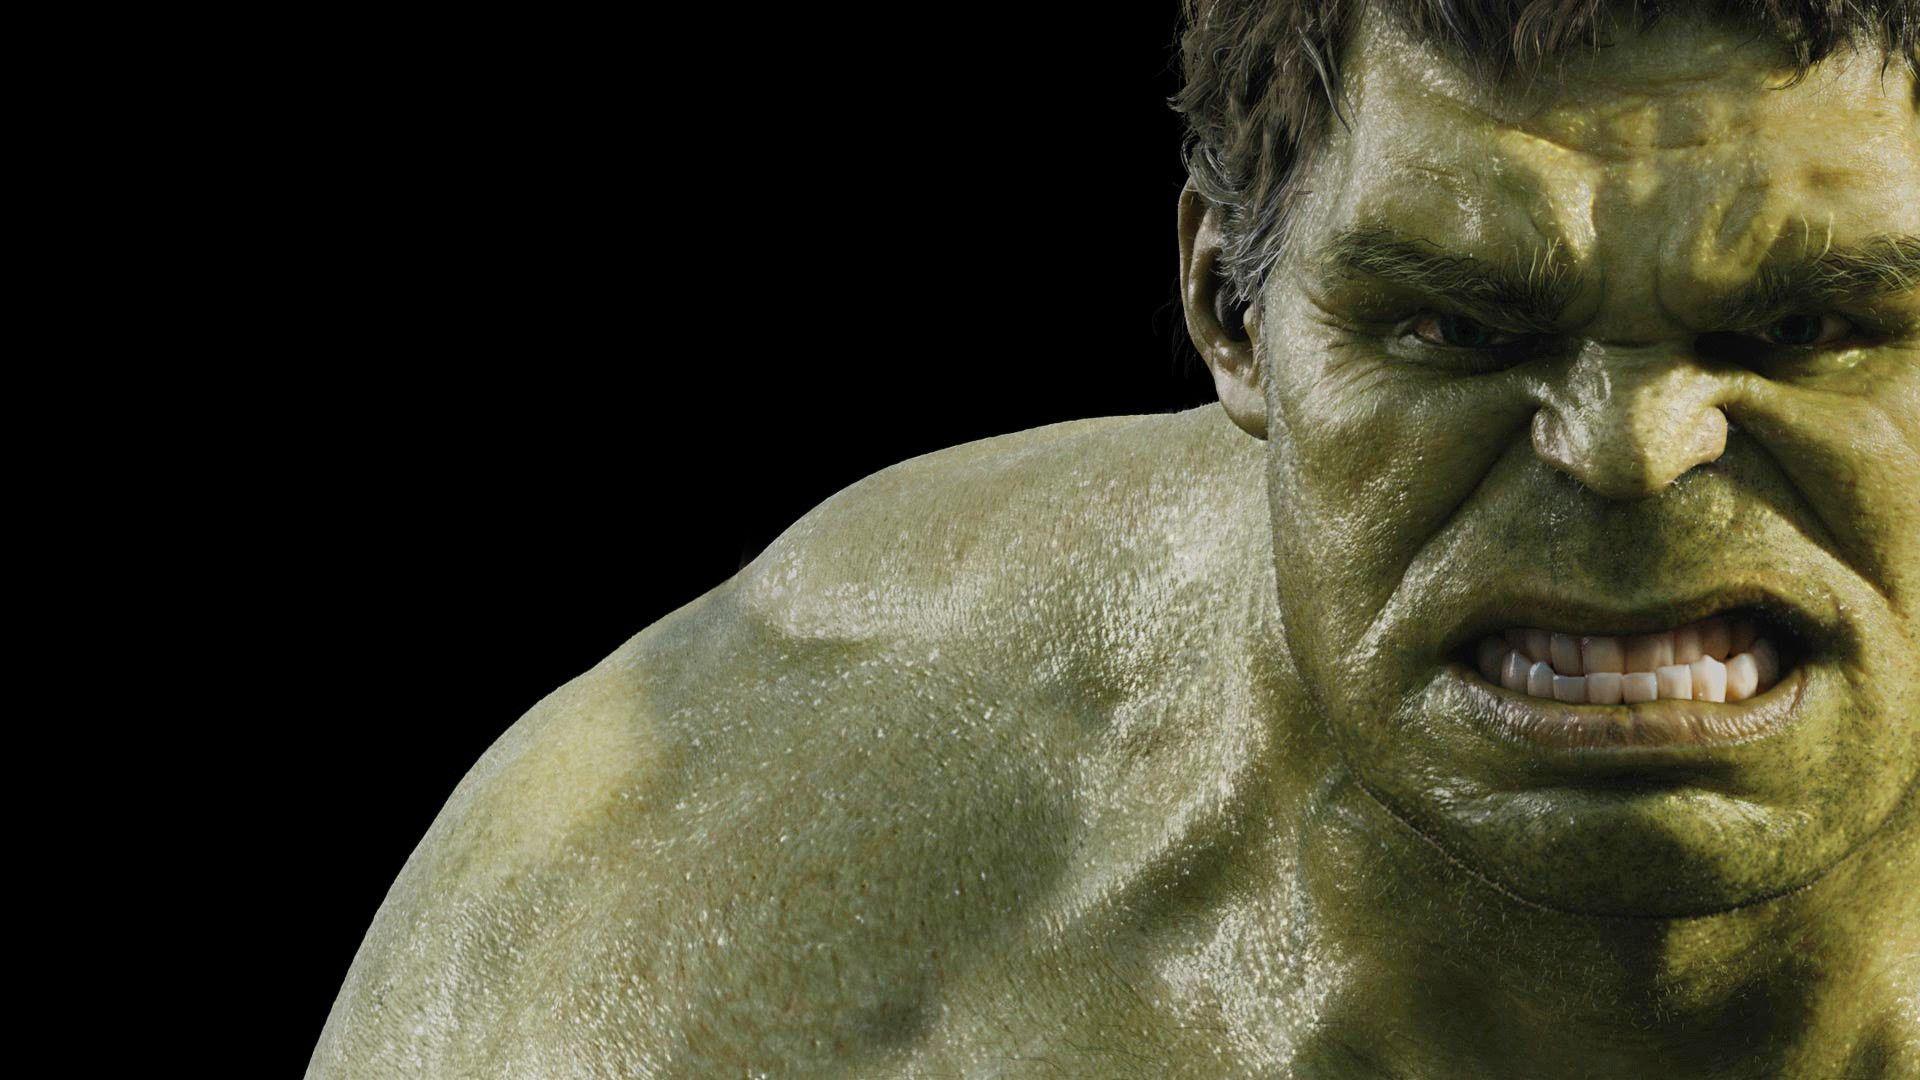 Big Green Monster  Hulk 2K wallpaper download